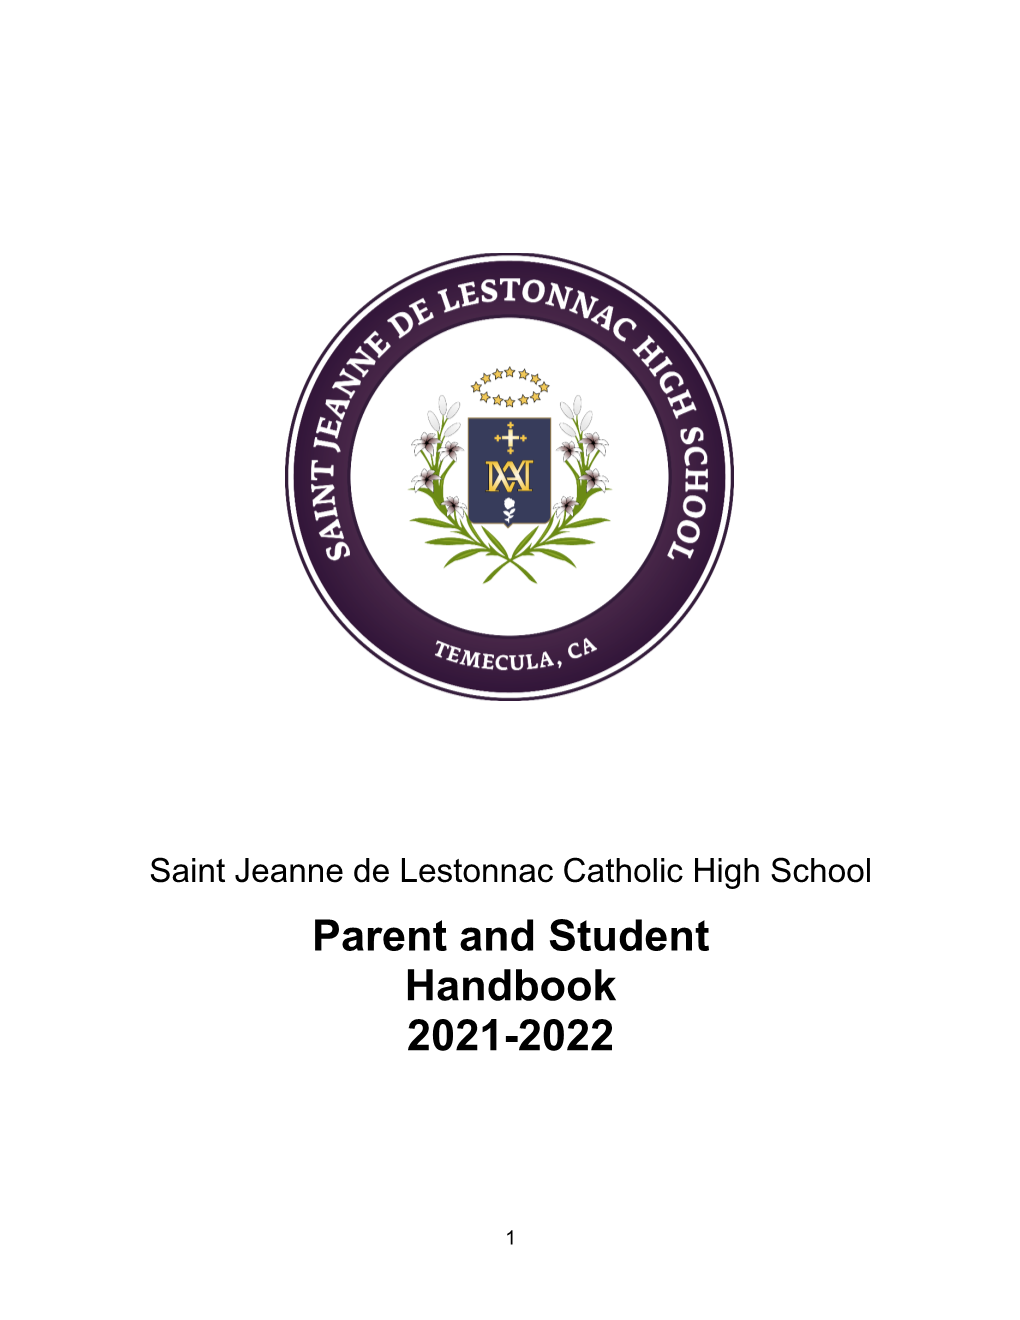 Parent and Student Handbook 2021-2022